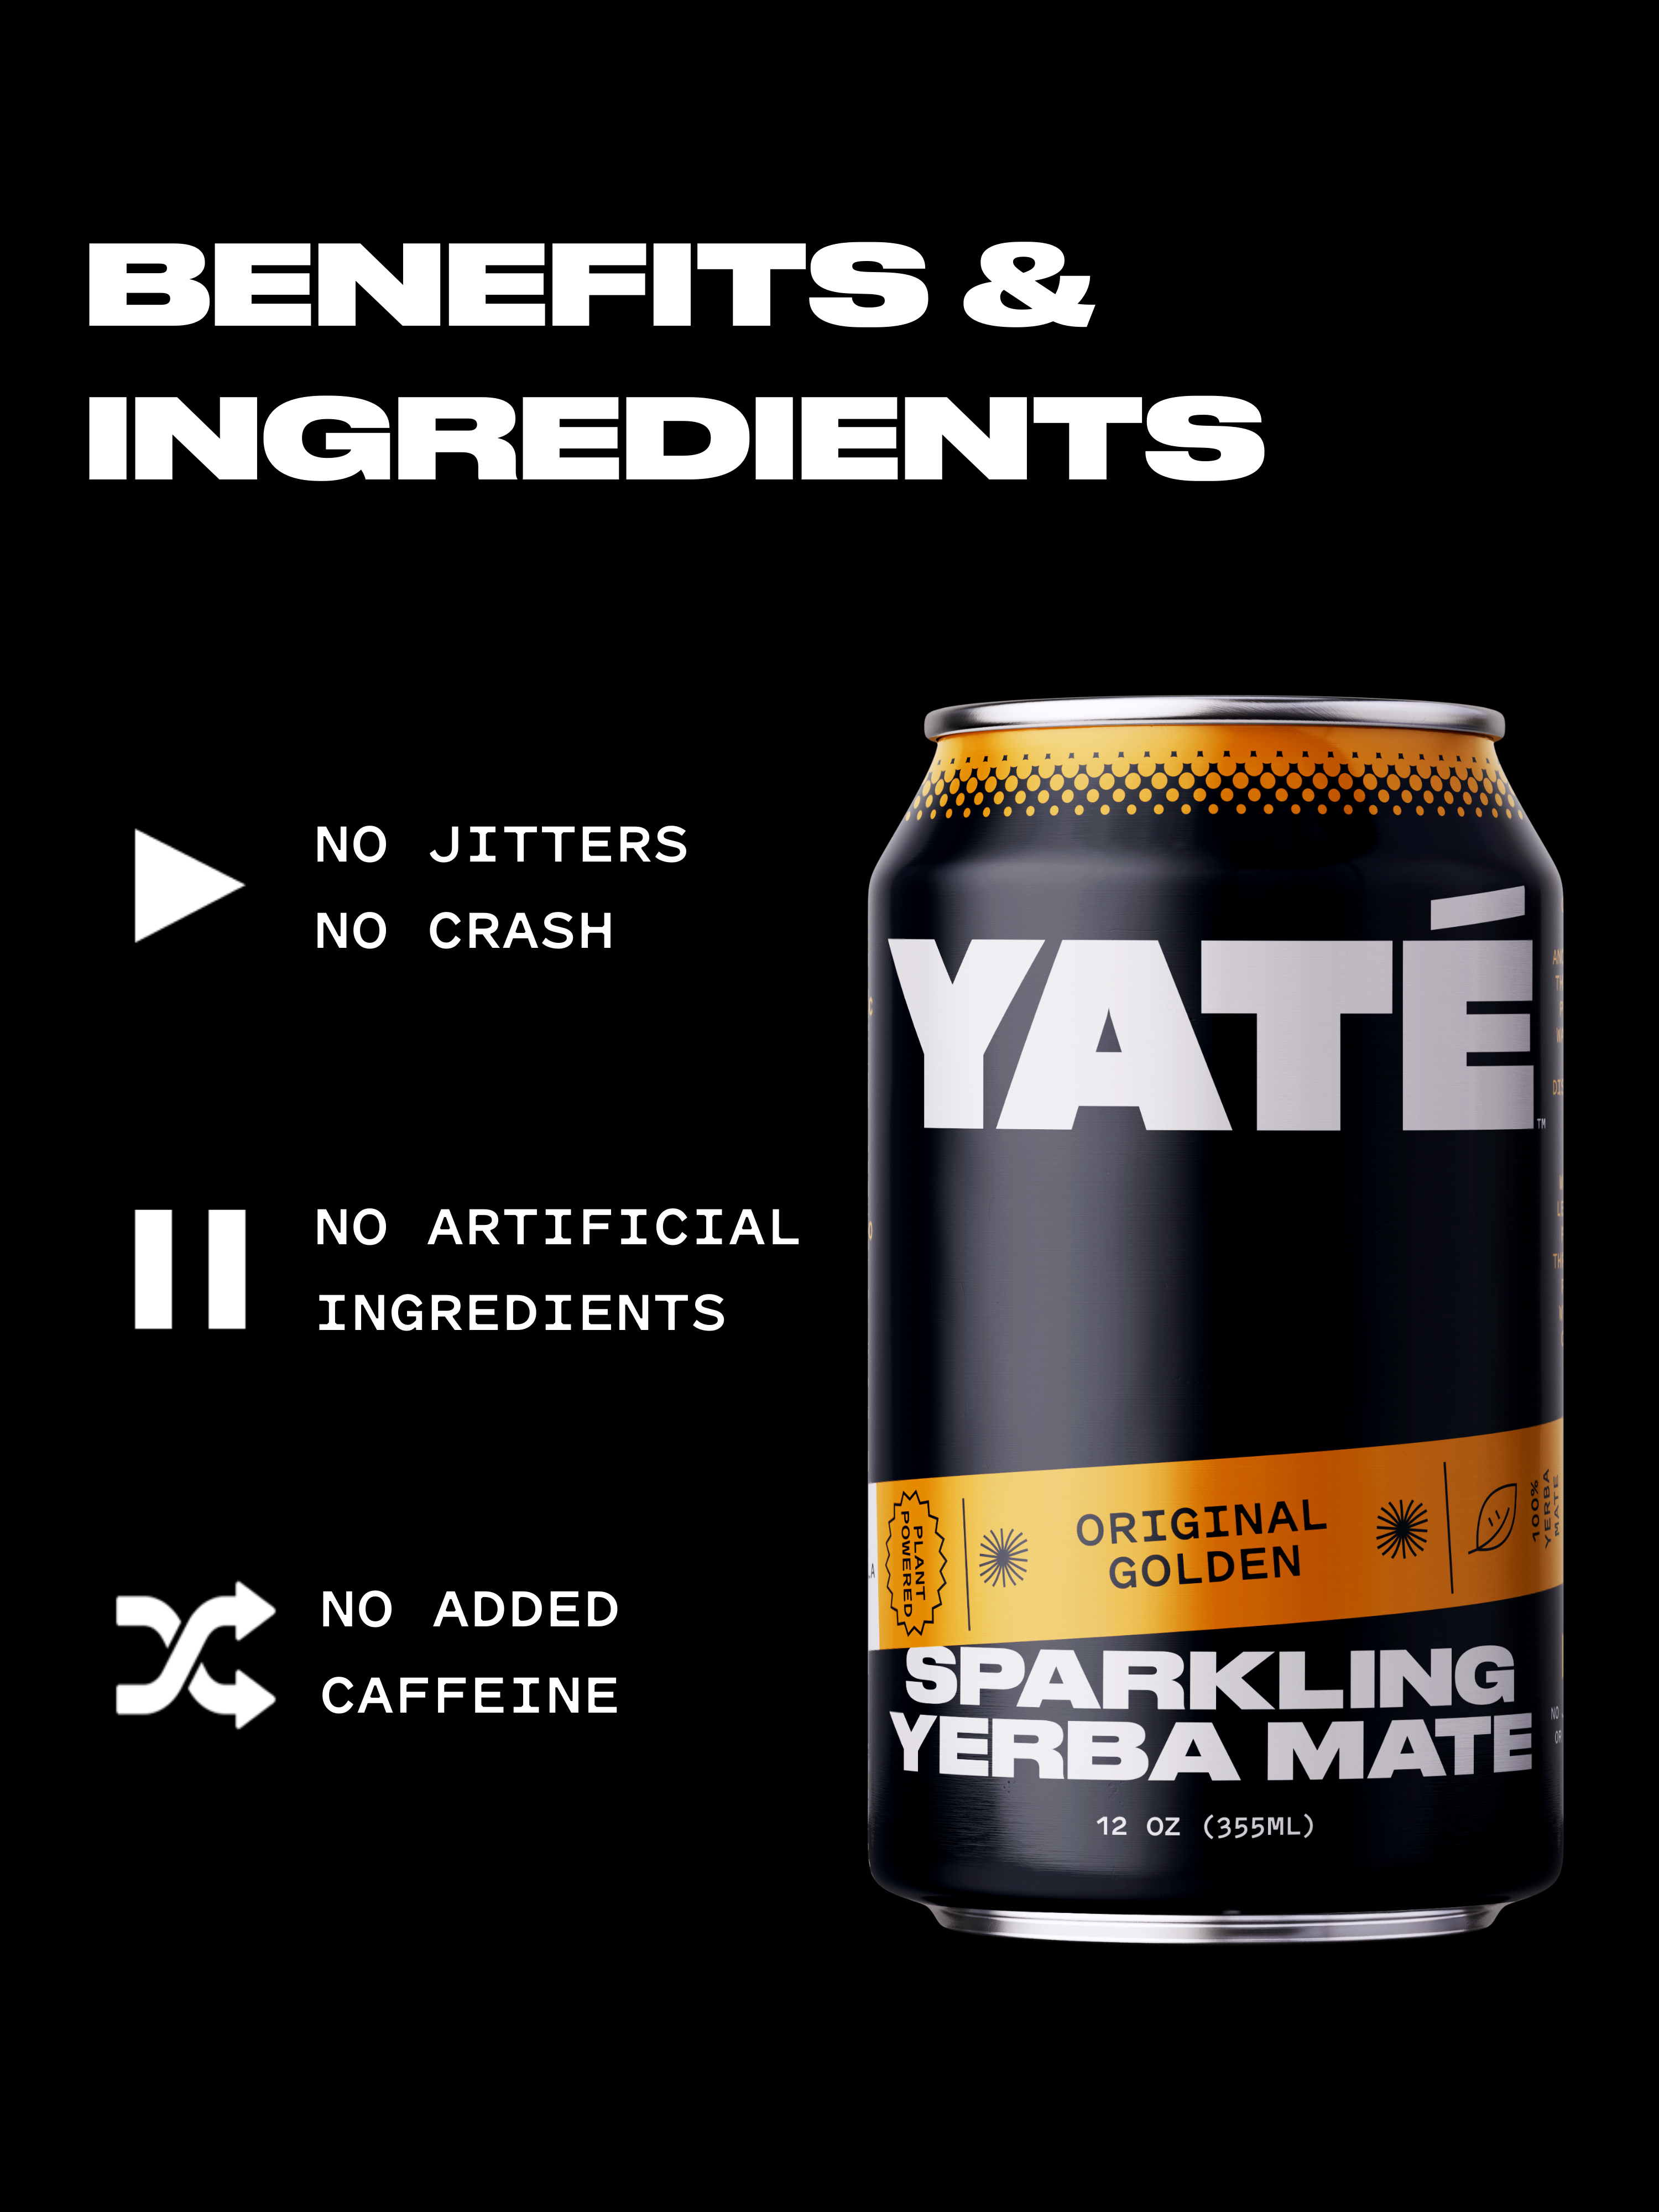 Yate Yerba Mate Original Golden Flavor 12oz Can Benefits & Ingredients